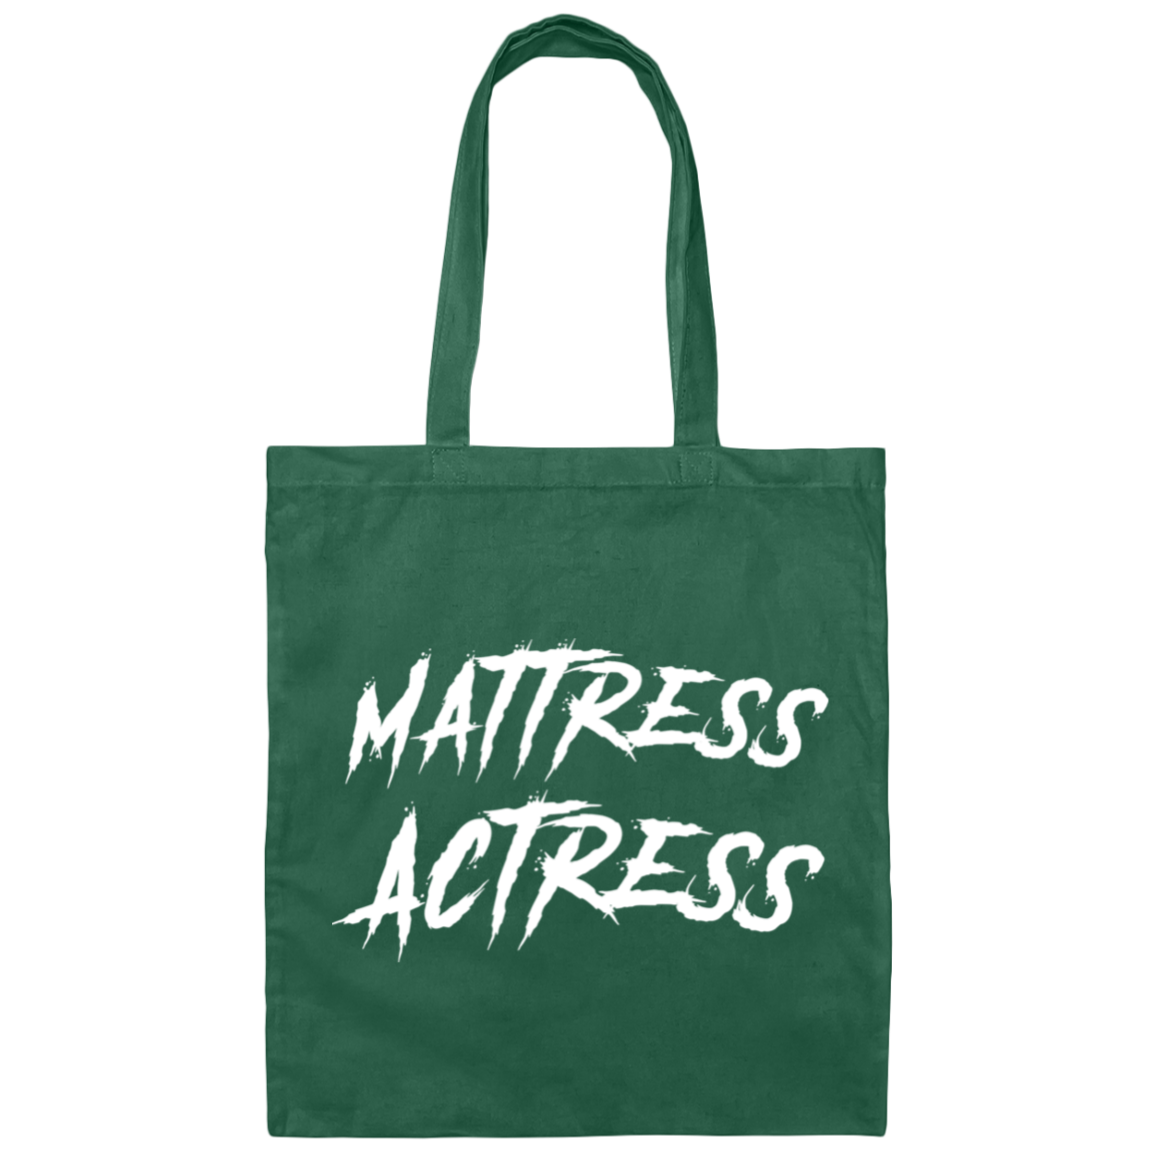 "Mattress Actress" Canvas Tote Bag